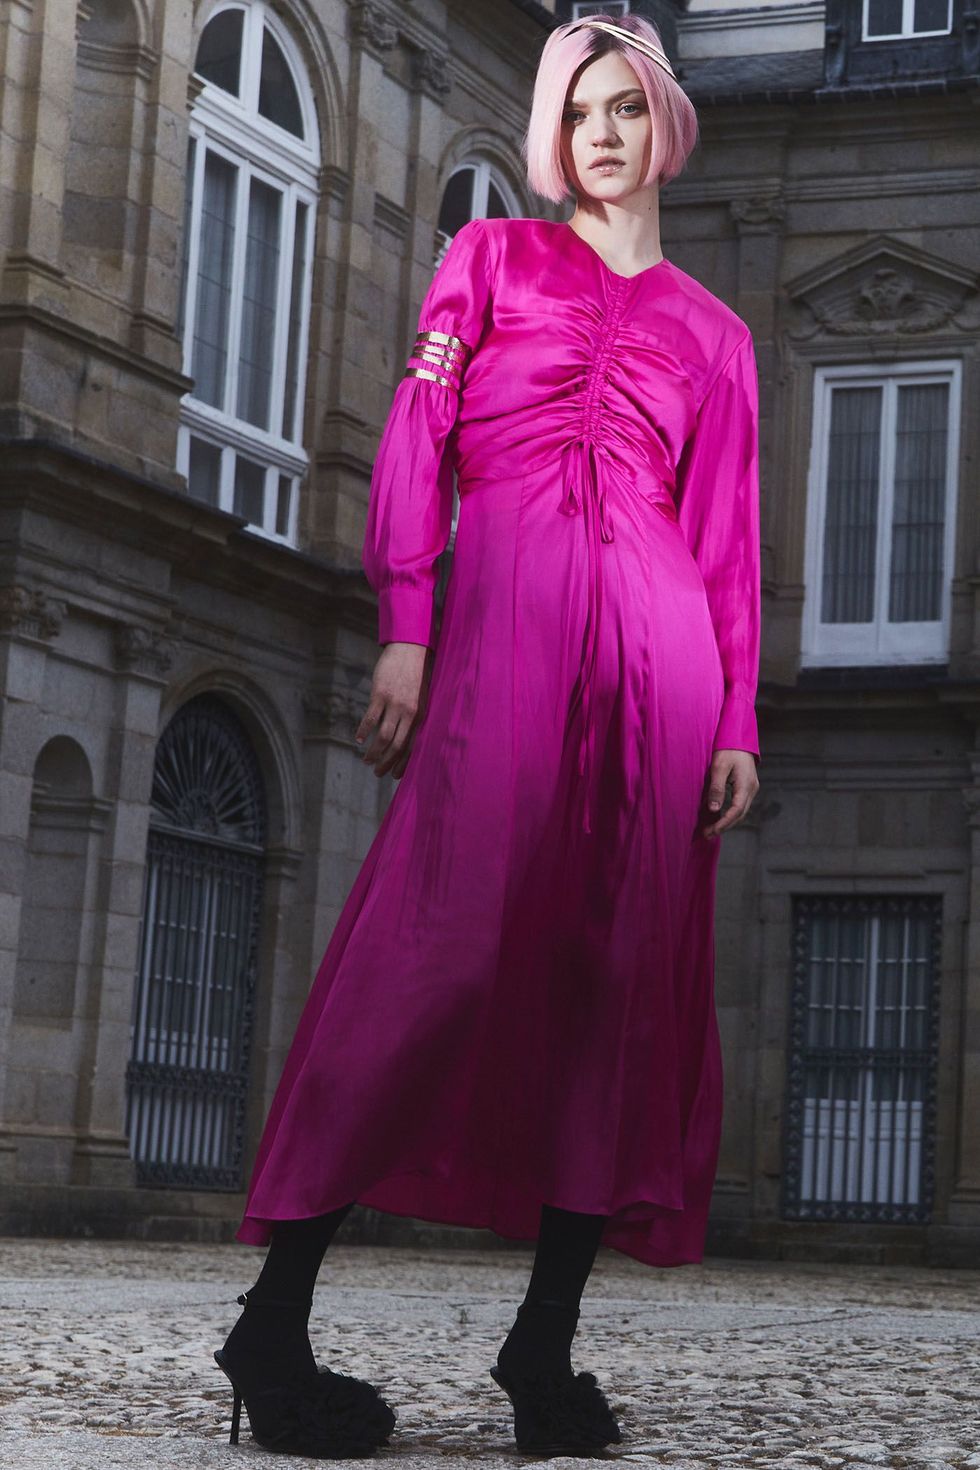 La falda rosa asequible de Sfera estilo Alta Costura